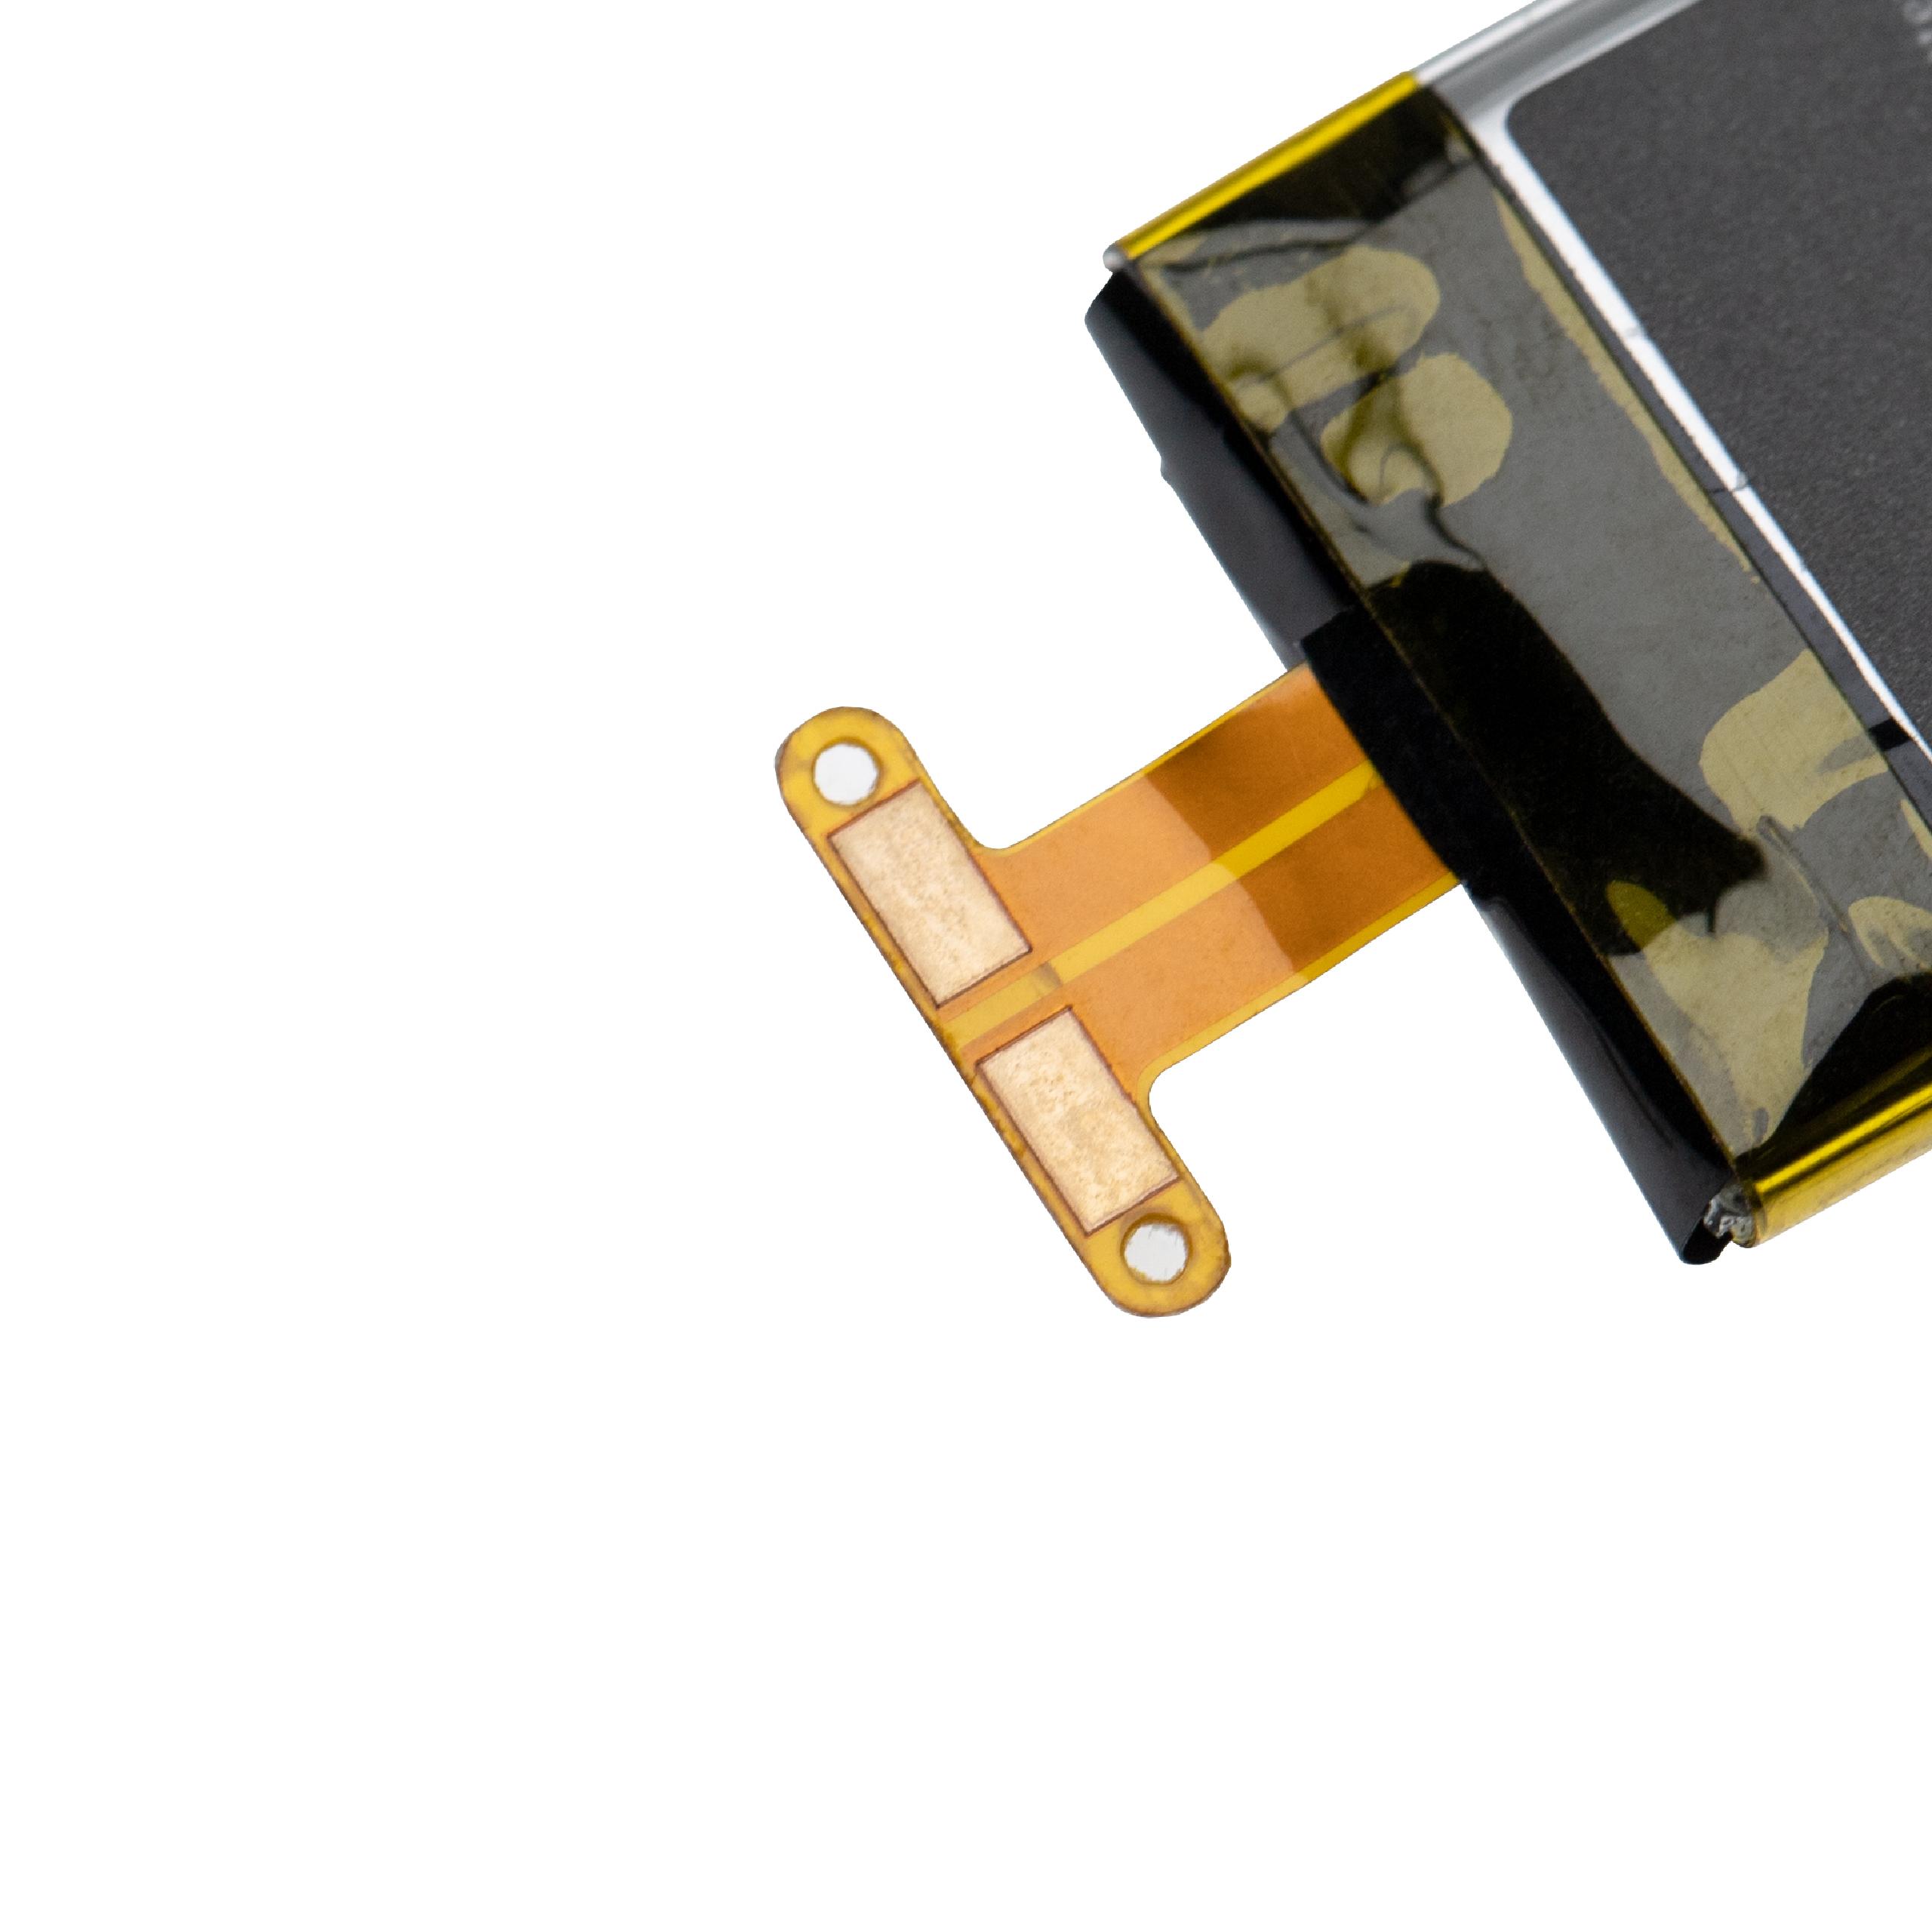 Smartwatch Battery Replacement for Pebble P11G7T-01-S01, SDI G7TH - 150mAh 3.7V Li-polymer